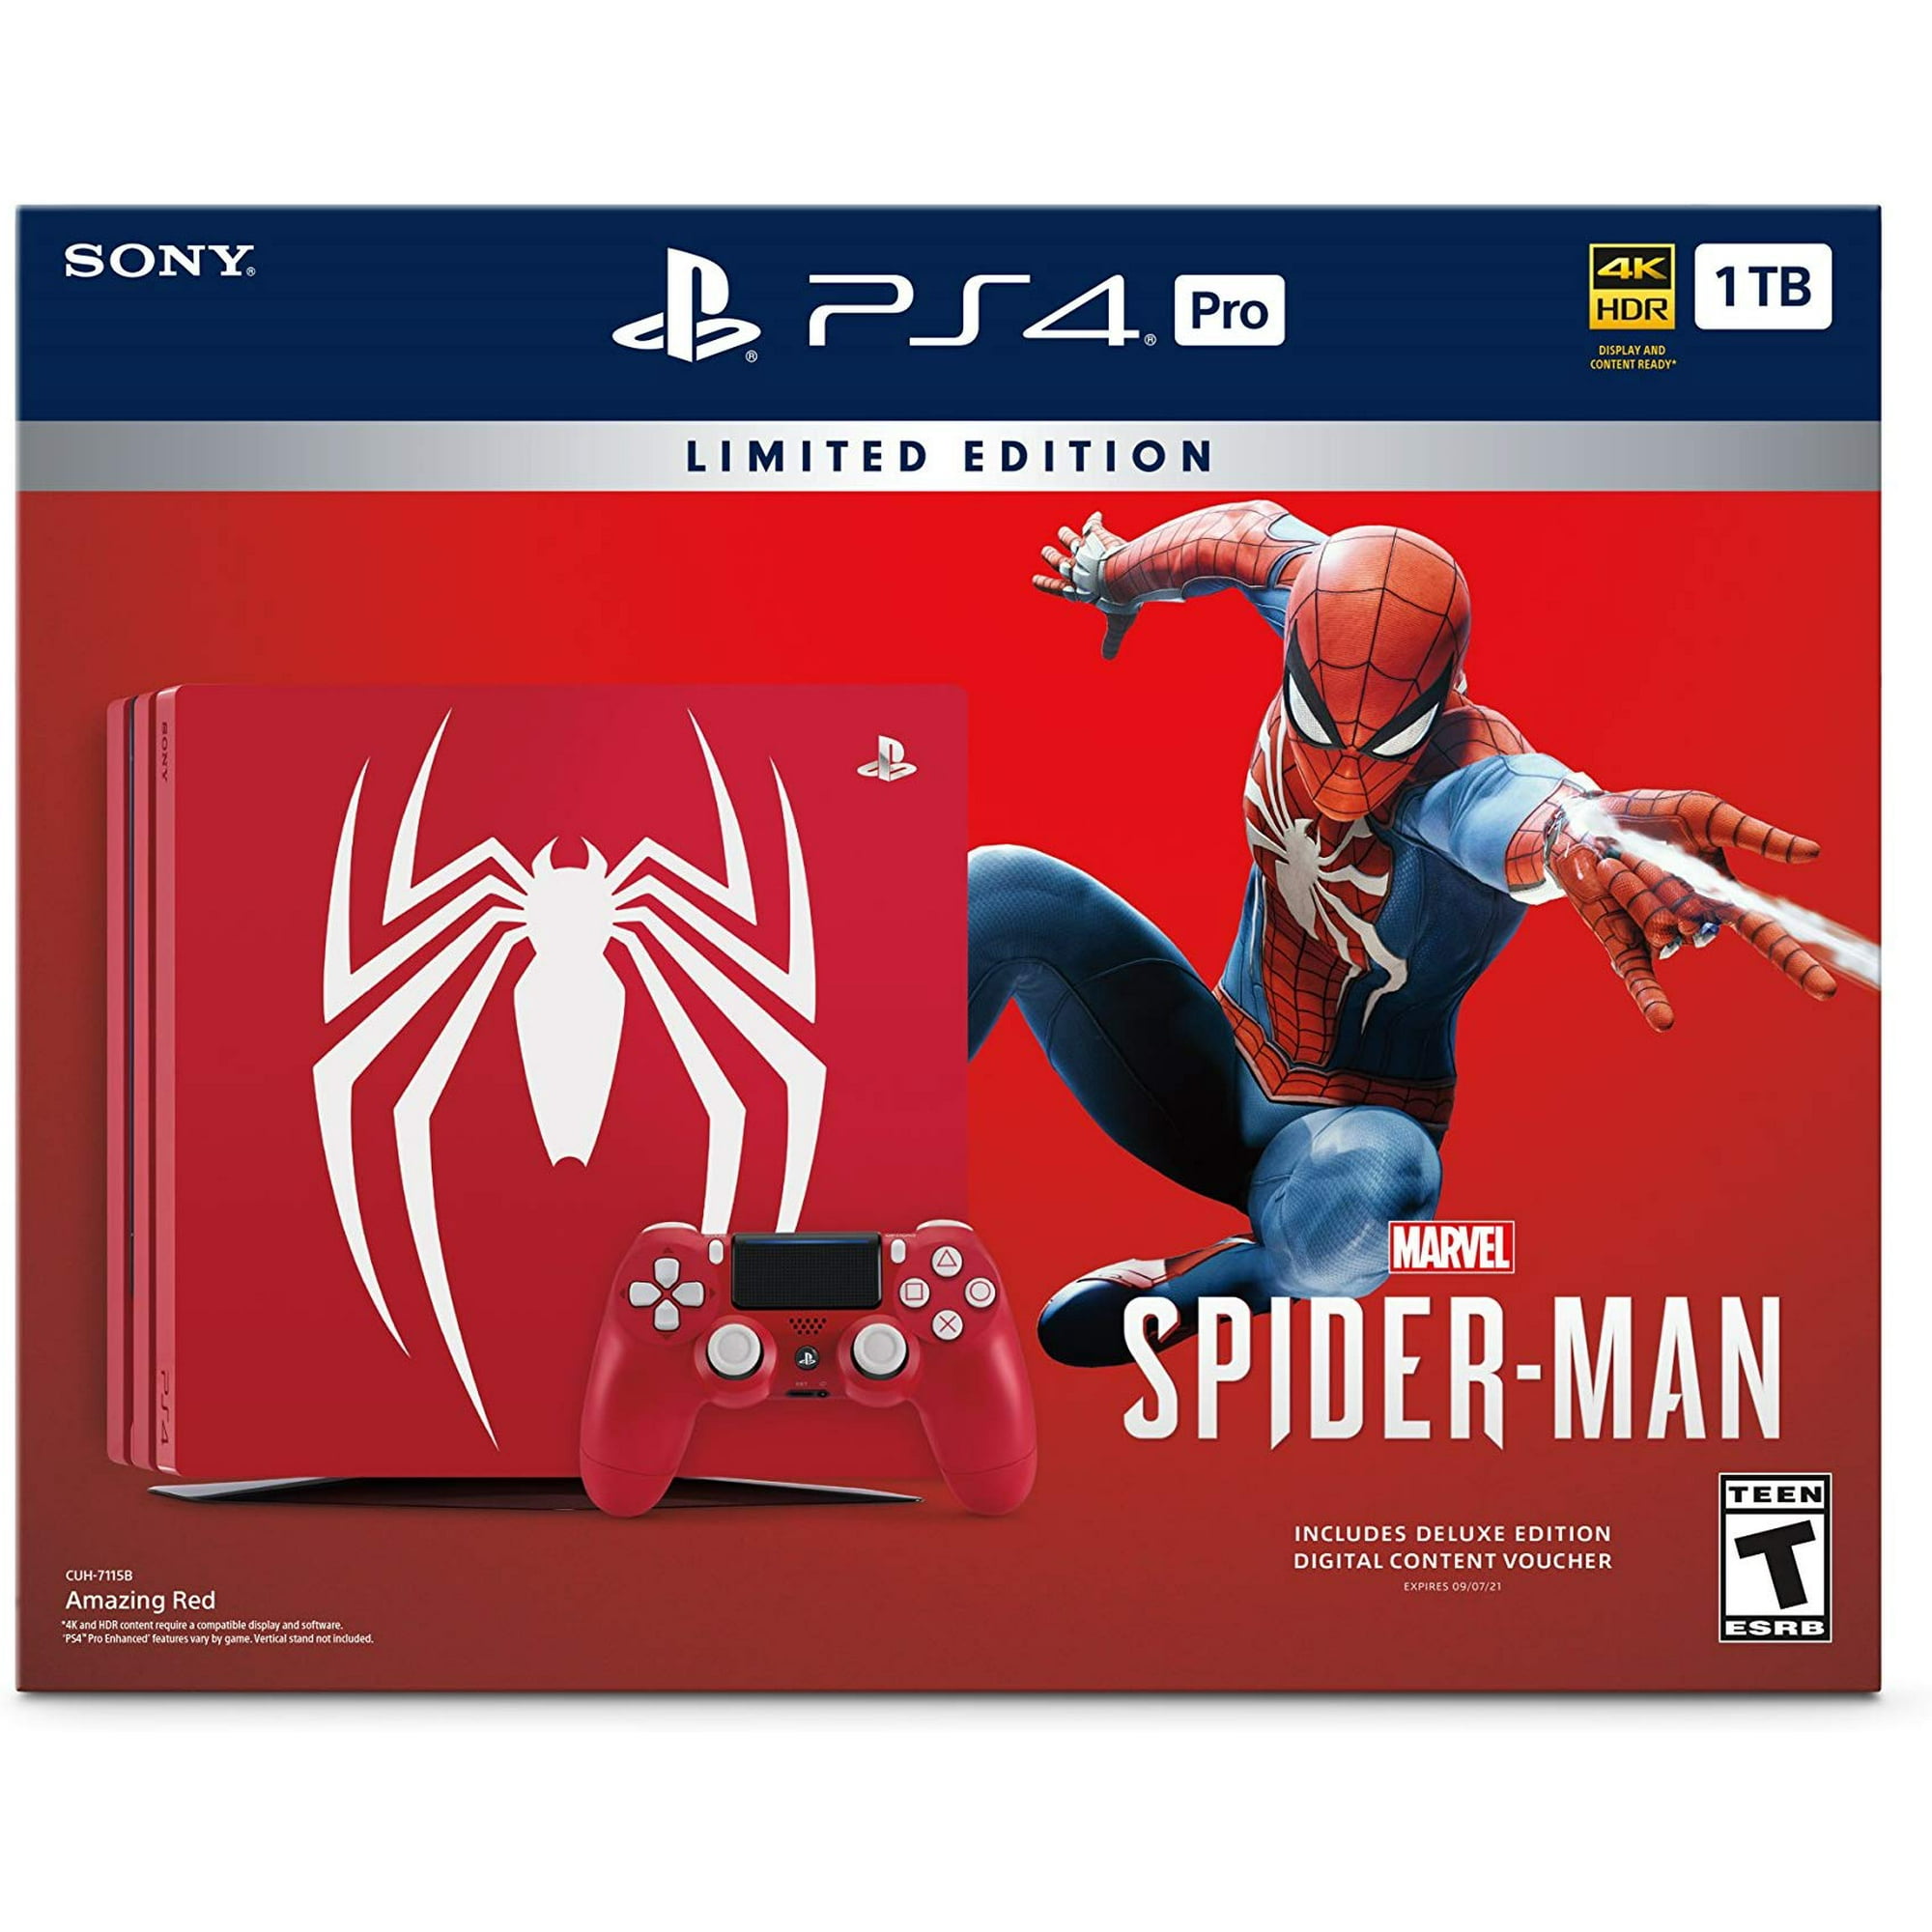 Спайдер про. Игровая приставка Sony PLAYSTATION 4 Pro Spider-man. Sony PLAYSTATION 4 Pro Limited Edition Spider man. Ps4 Spider man приставка. Sony ps4 Pro Spider man.